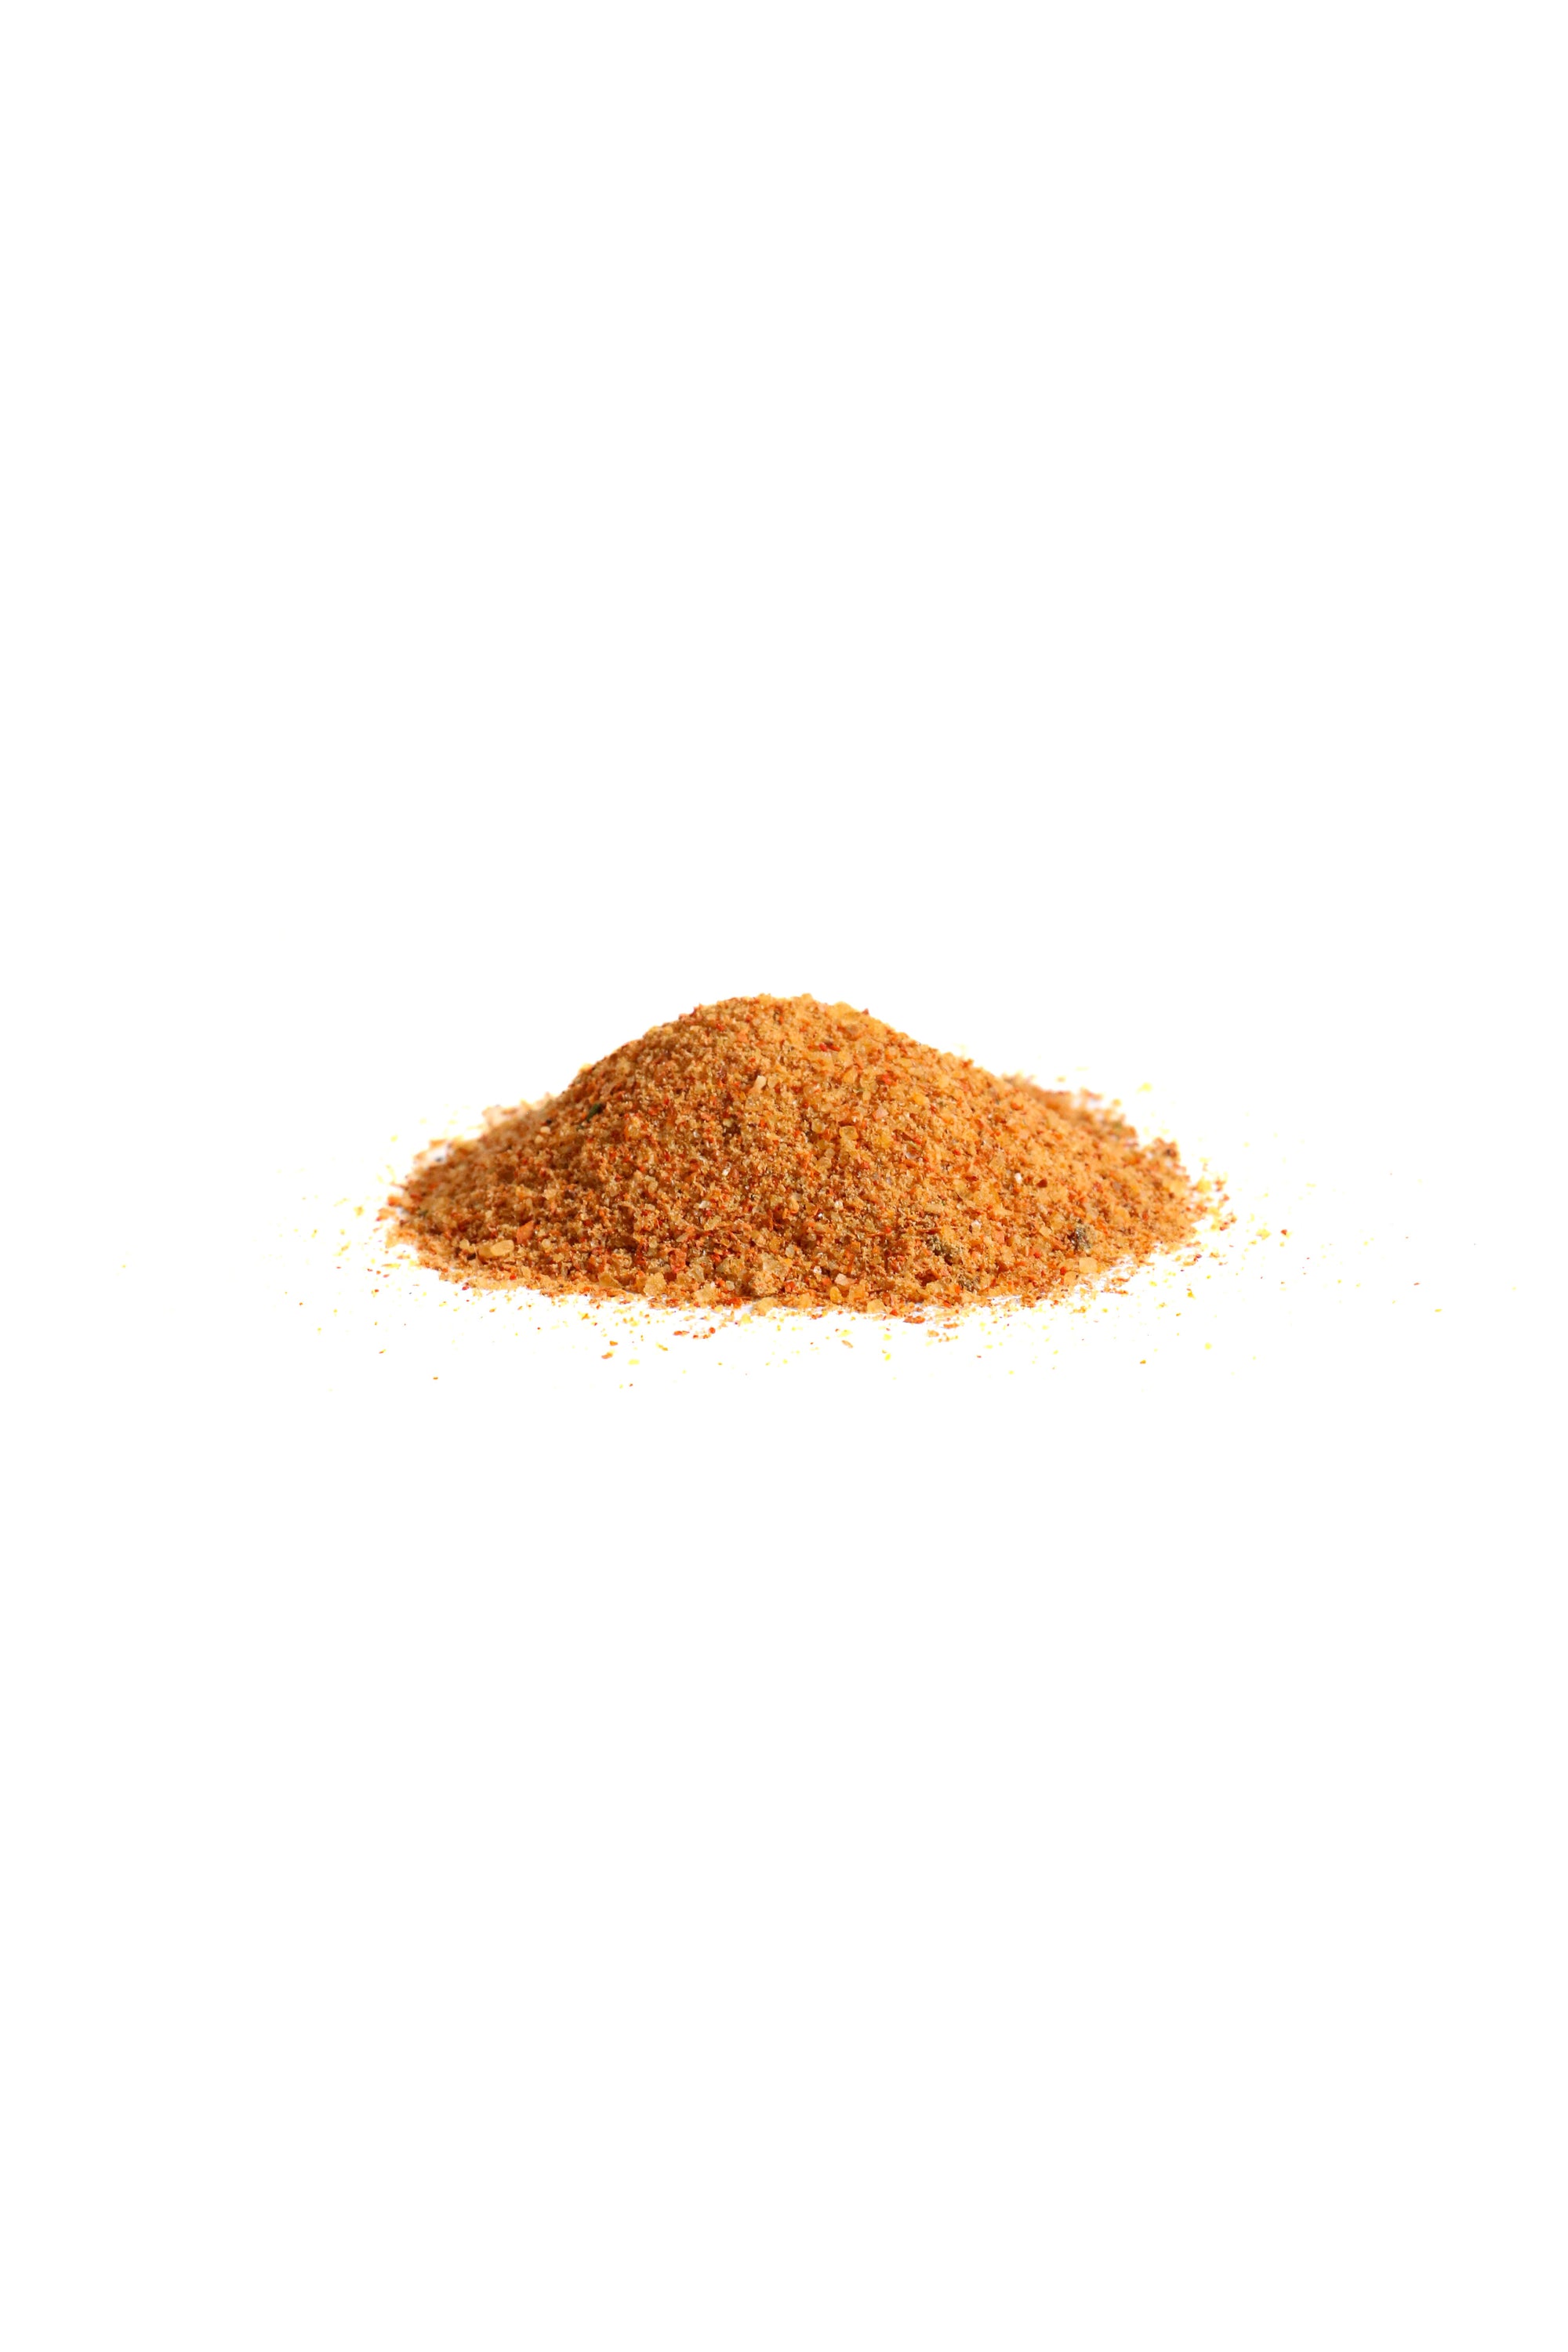 Macho Spice 1KG